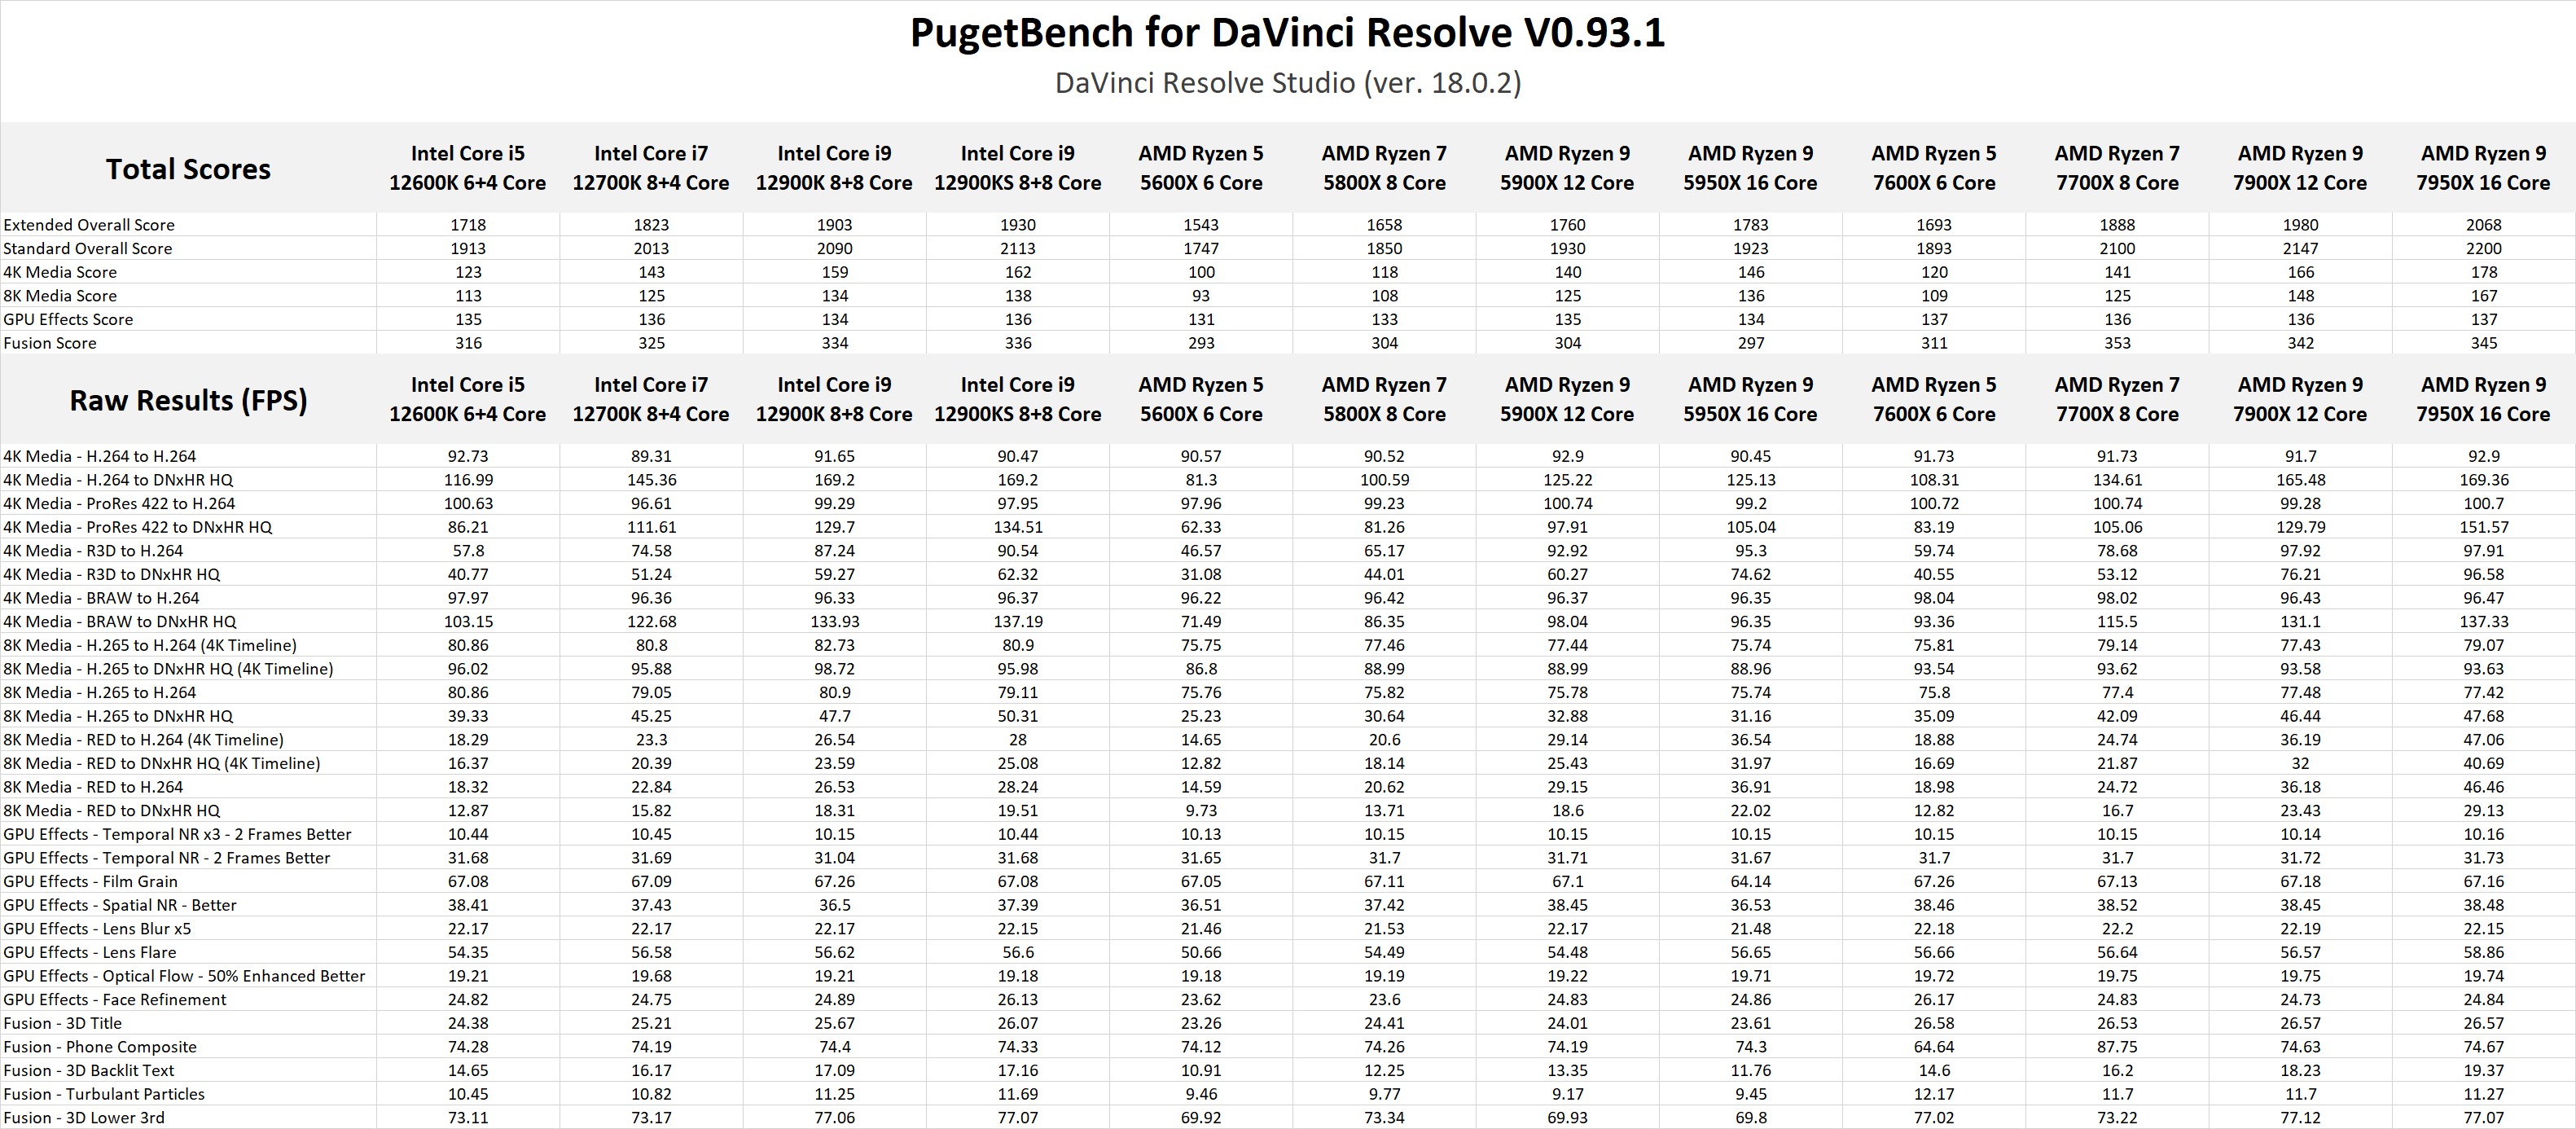 PugetBench for DaVinci Resolve AMD Ryzen 7000 raw results